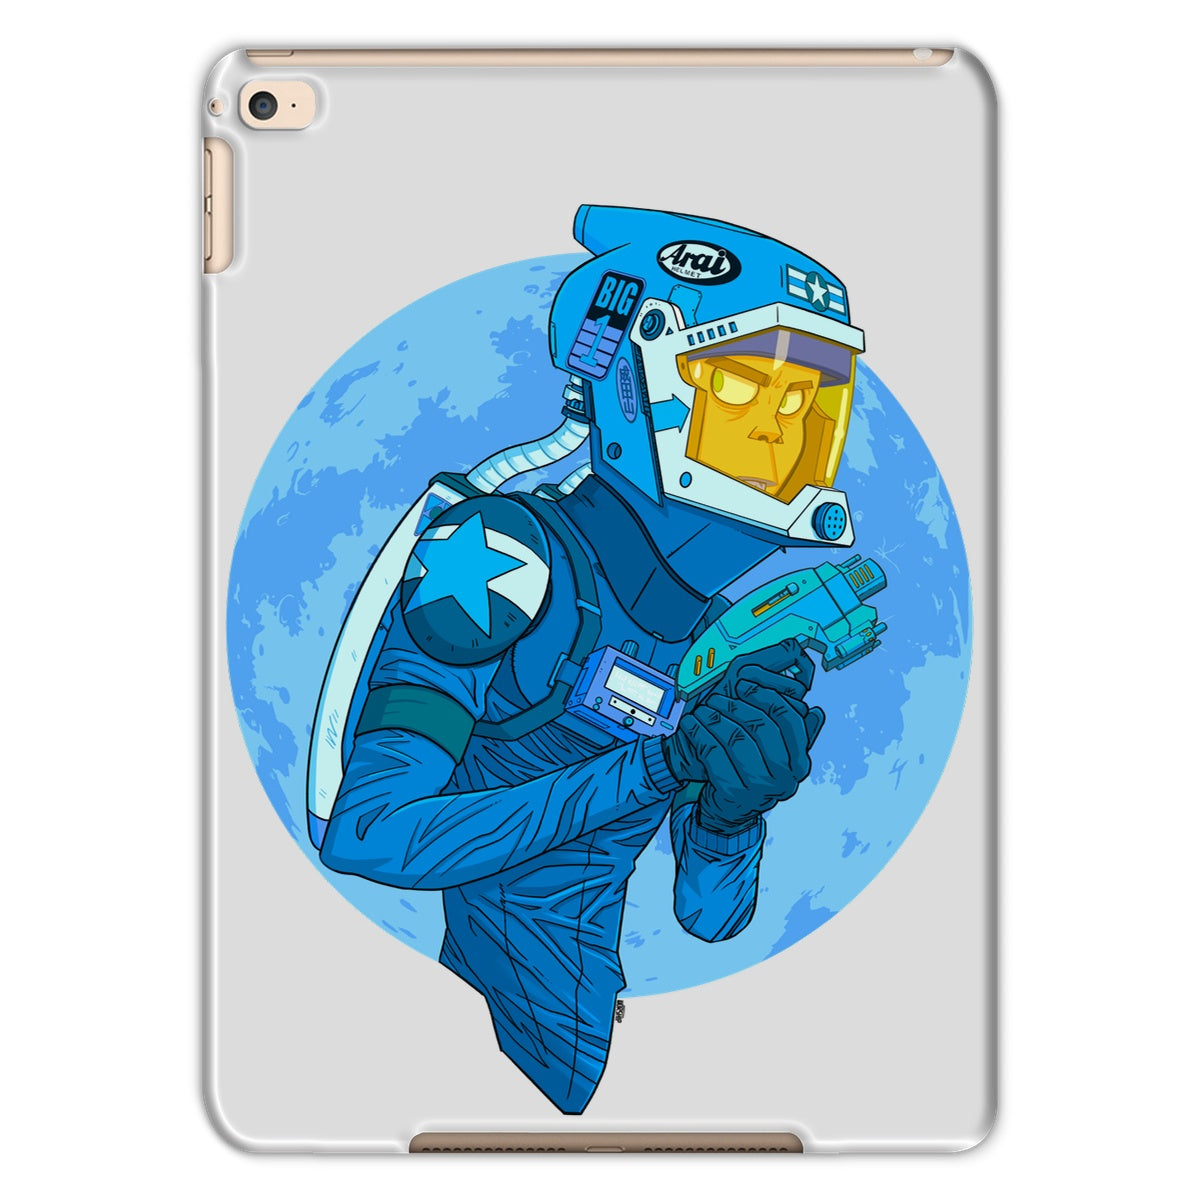 Unique and cool Gorillaz-style retro sci-fi Tablet Case illustration 